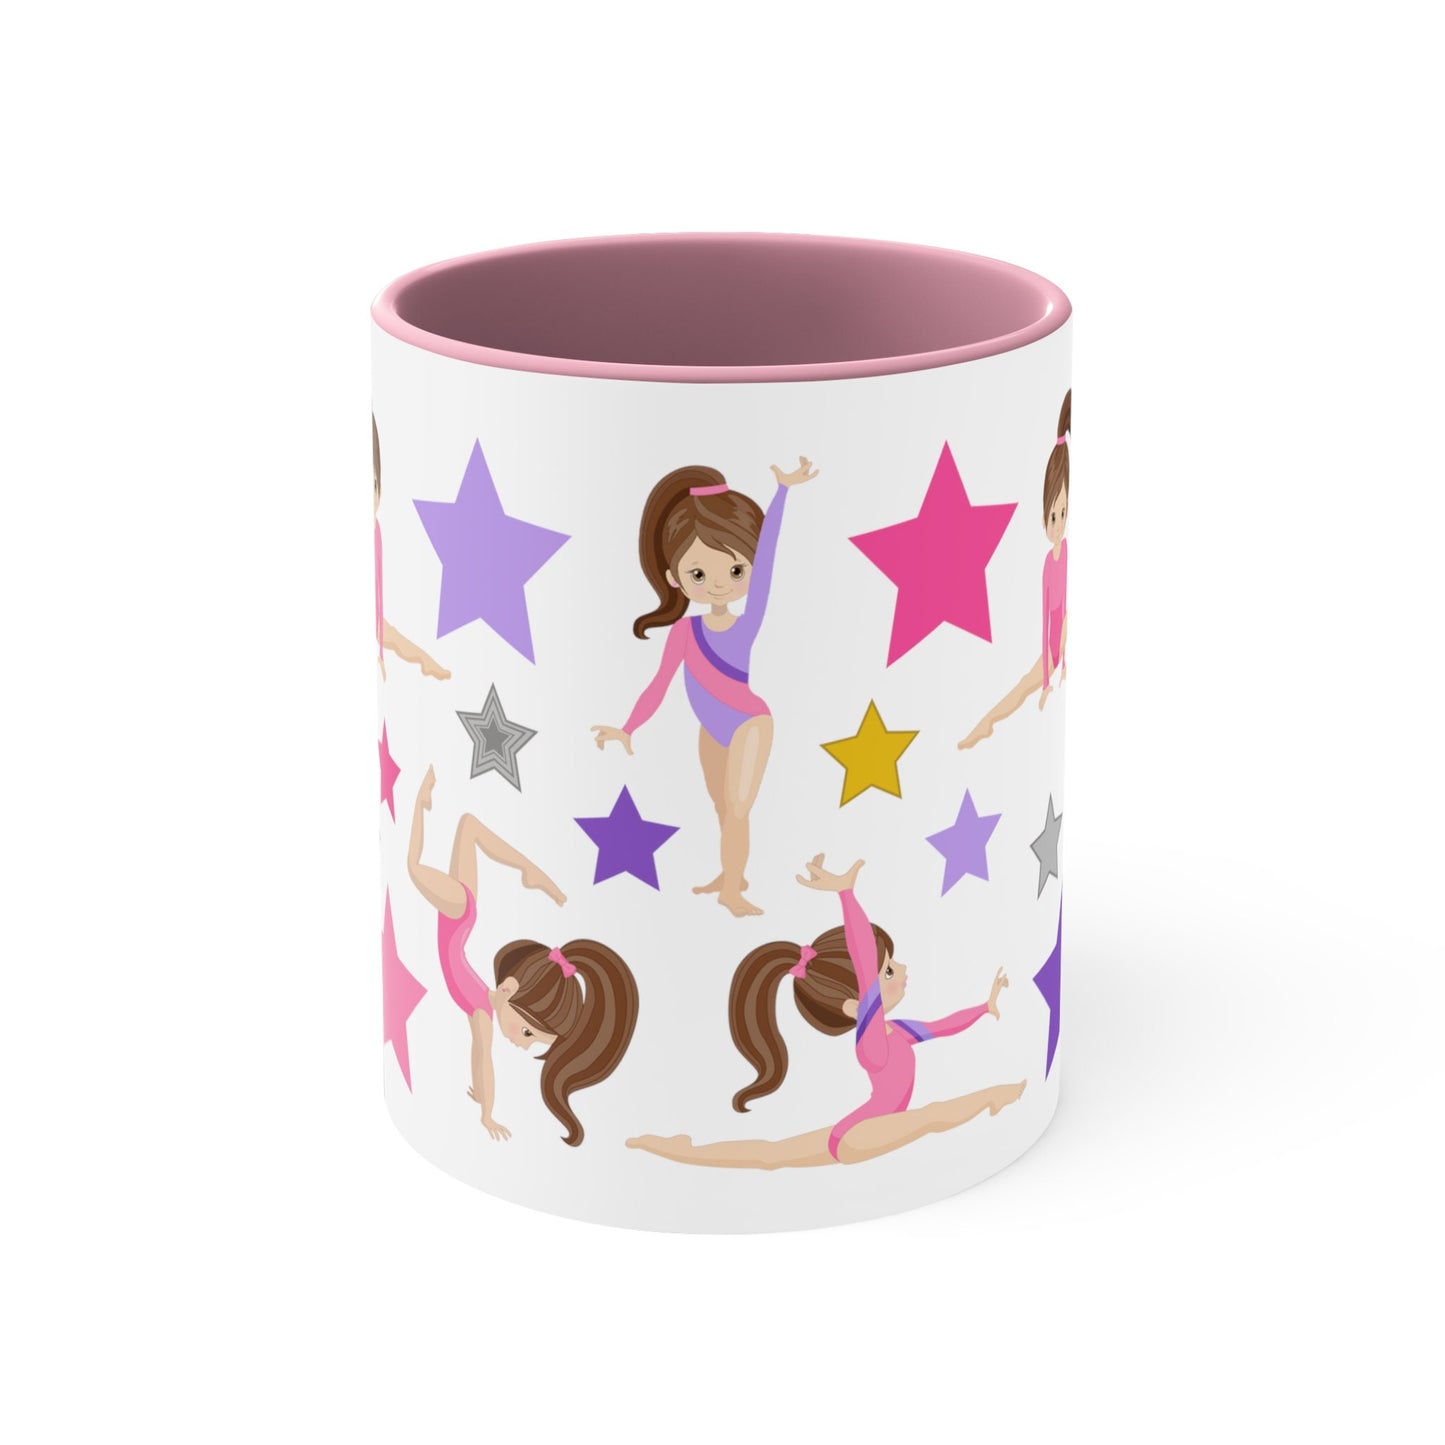 Gymnastics Ceramic Coffee Mug, Cute Gymnasts & Stars Mug for Kids, Coffee Cup Gift Mug, Hot Cocoa Mug, Tea Mug Gift, Tumble Gym Coach Gift